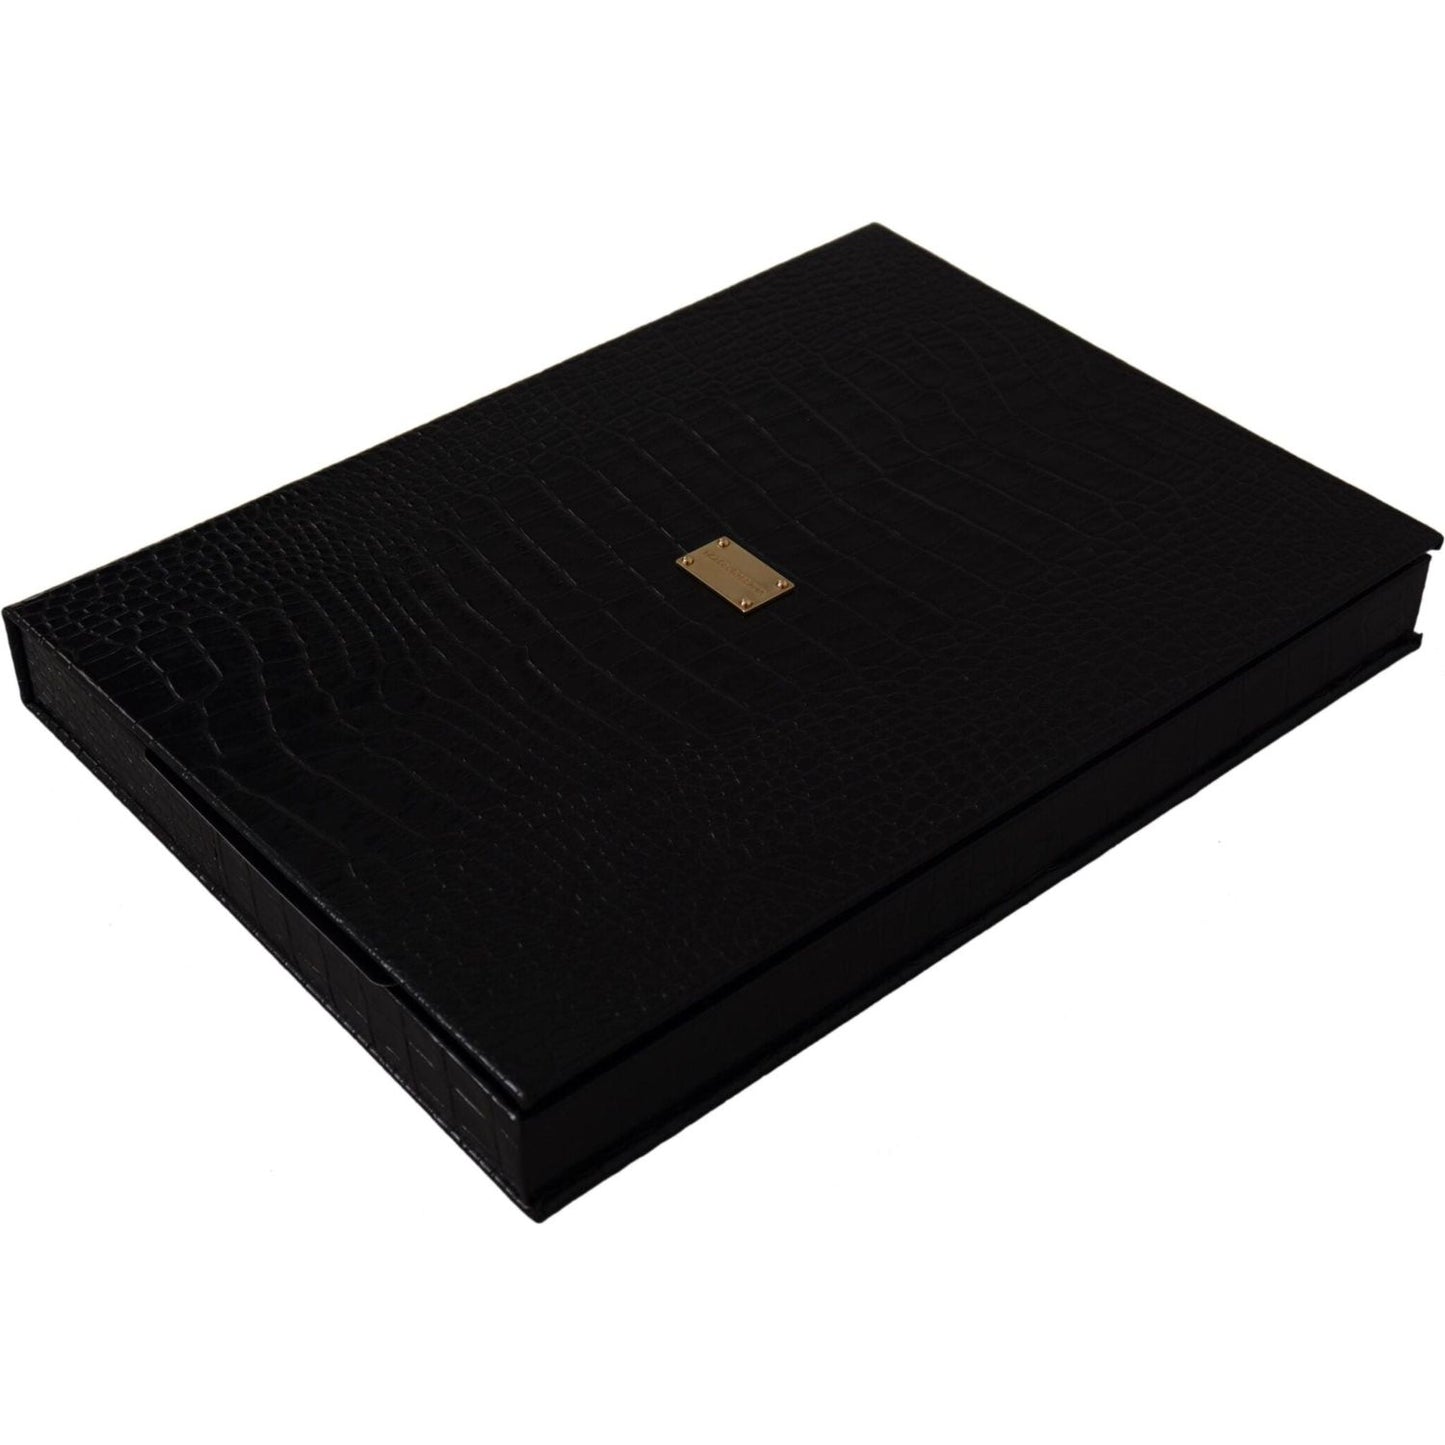 Dolce & Gabbana Elegant Black Leather Catalogue Case black-leather-booklet-decor-mens-case-catalogue-folding-book